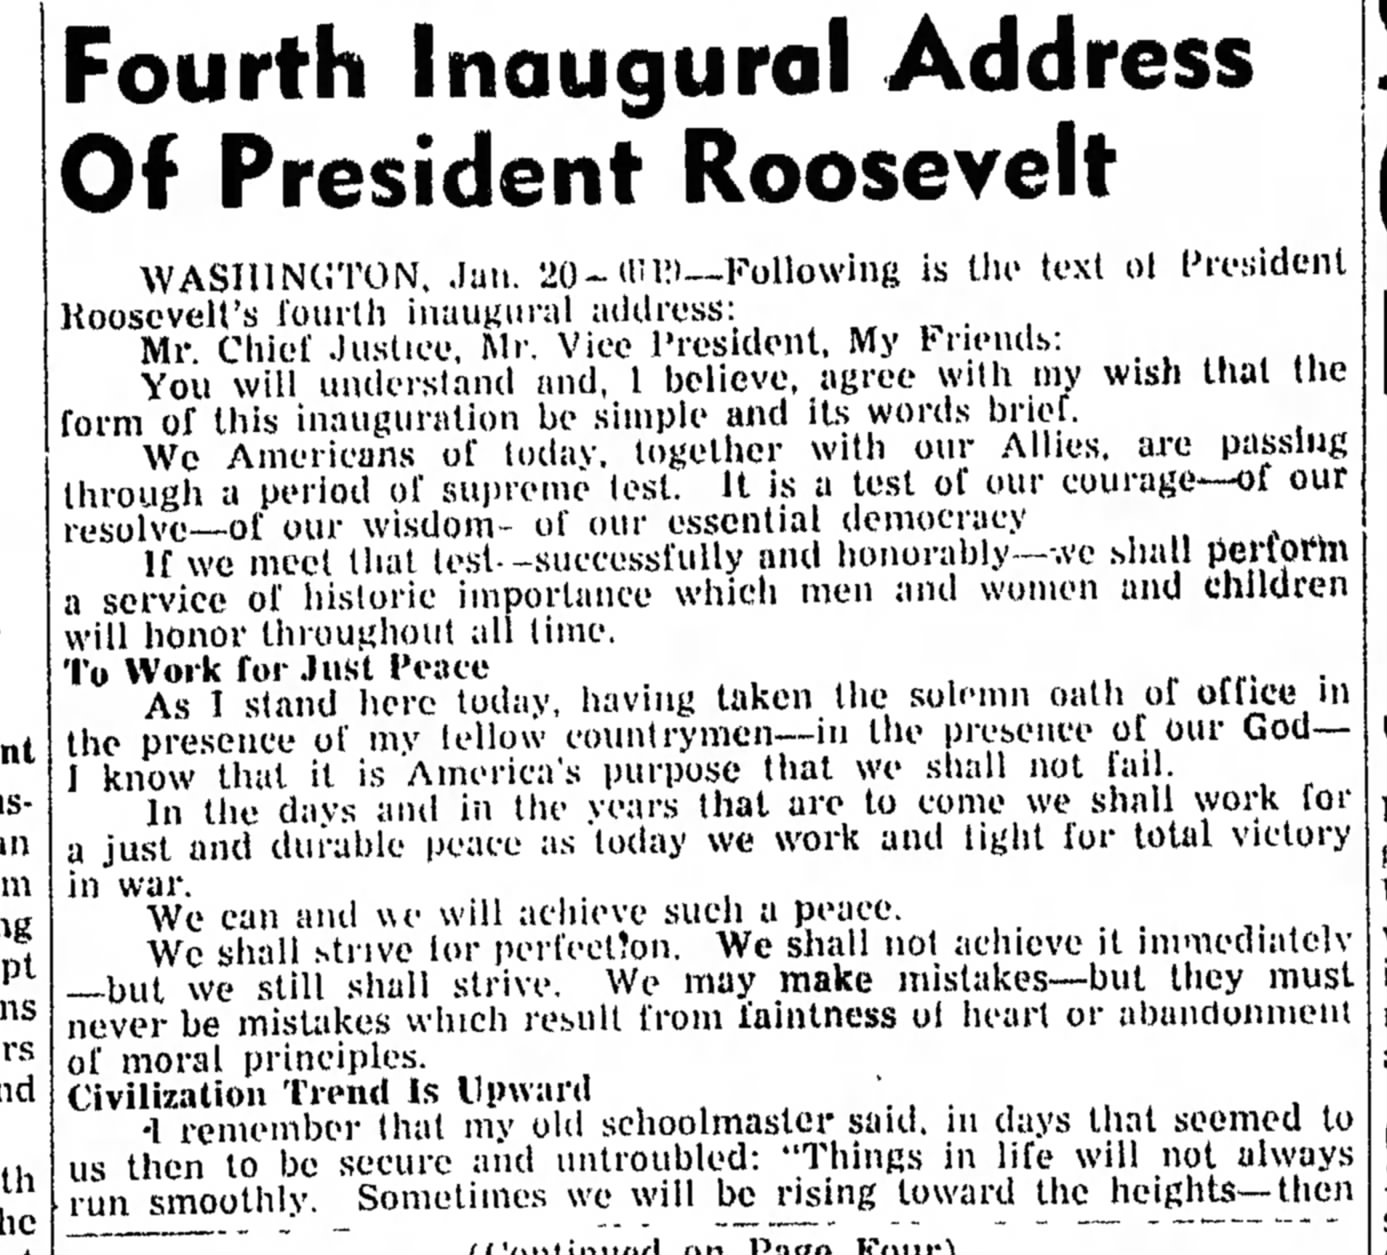 Fourth Inaugural Address of President Roosevelt